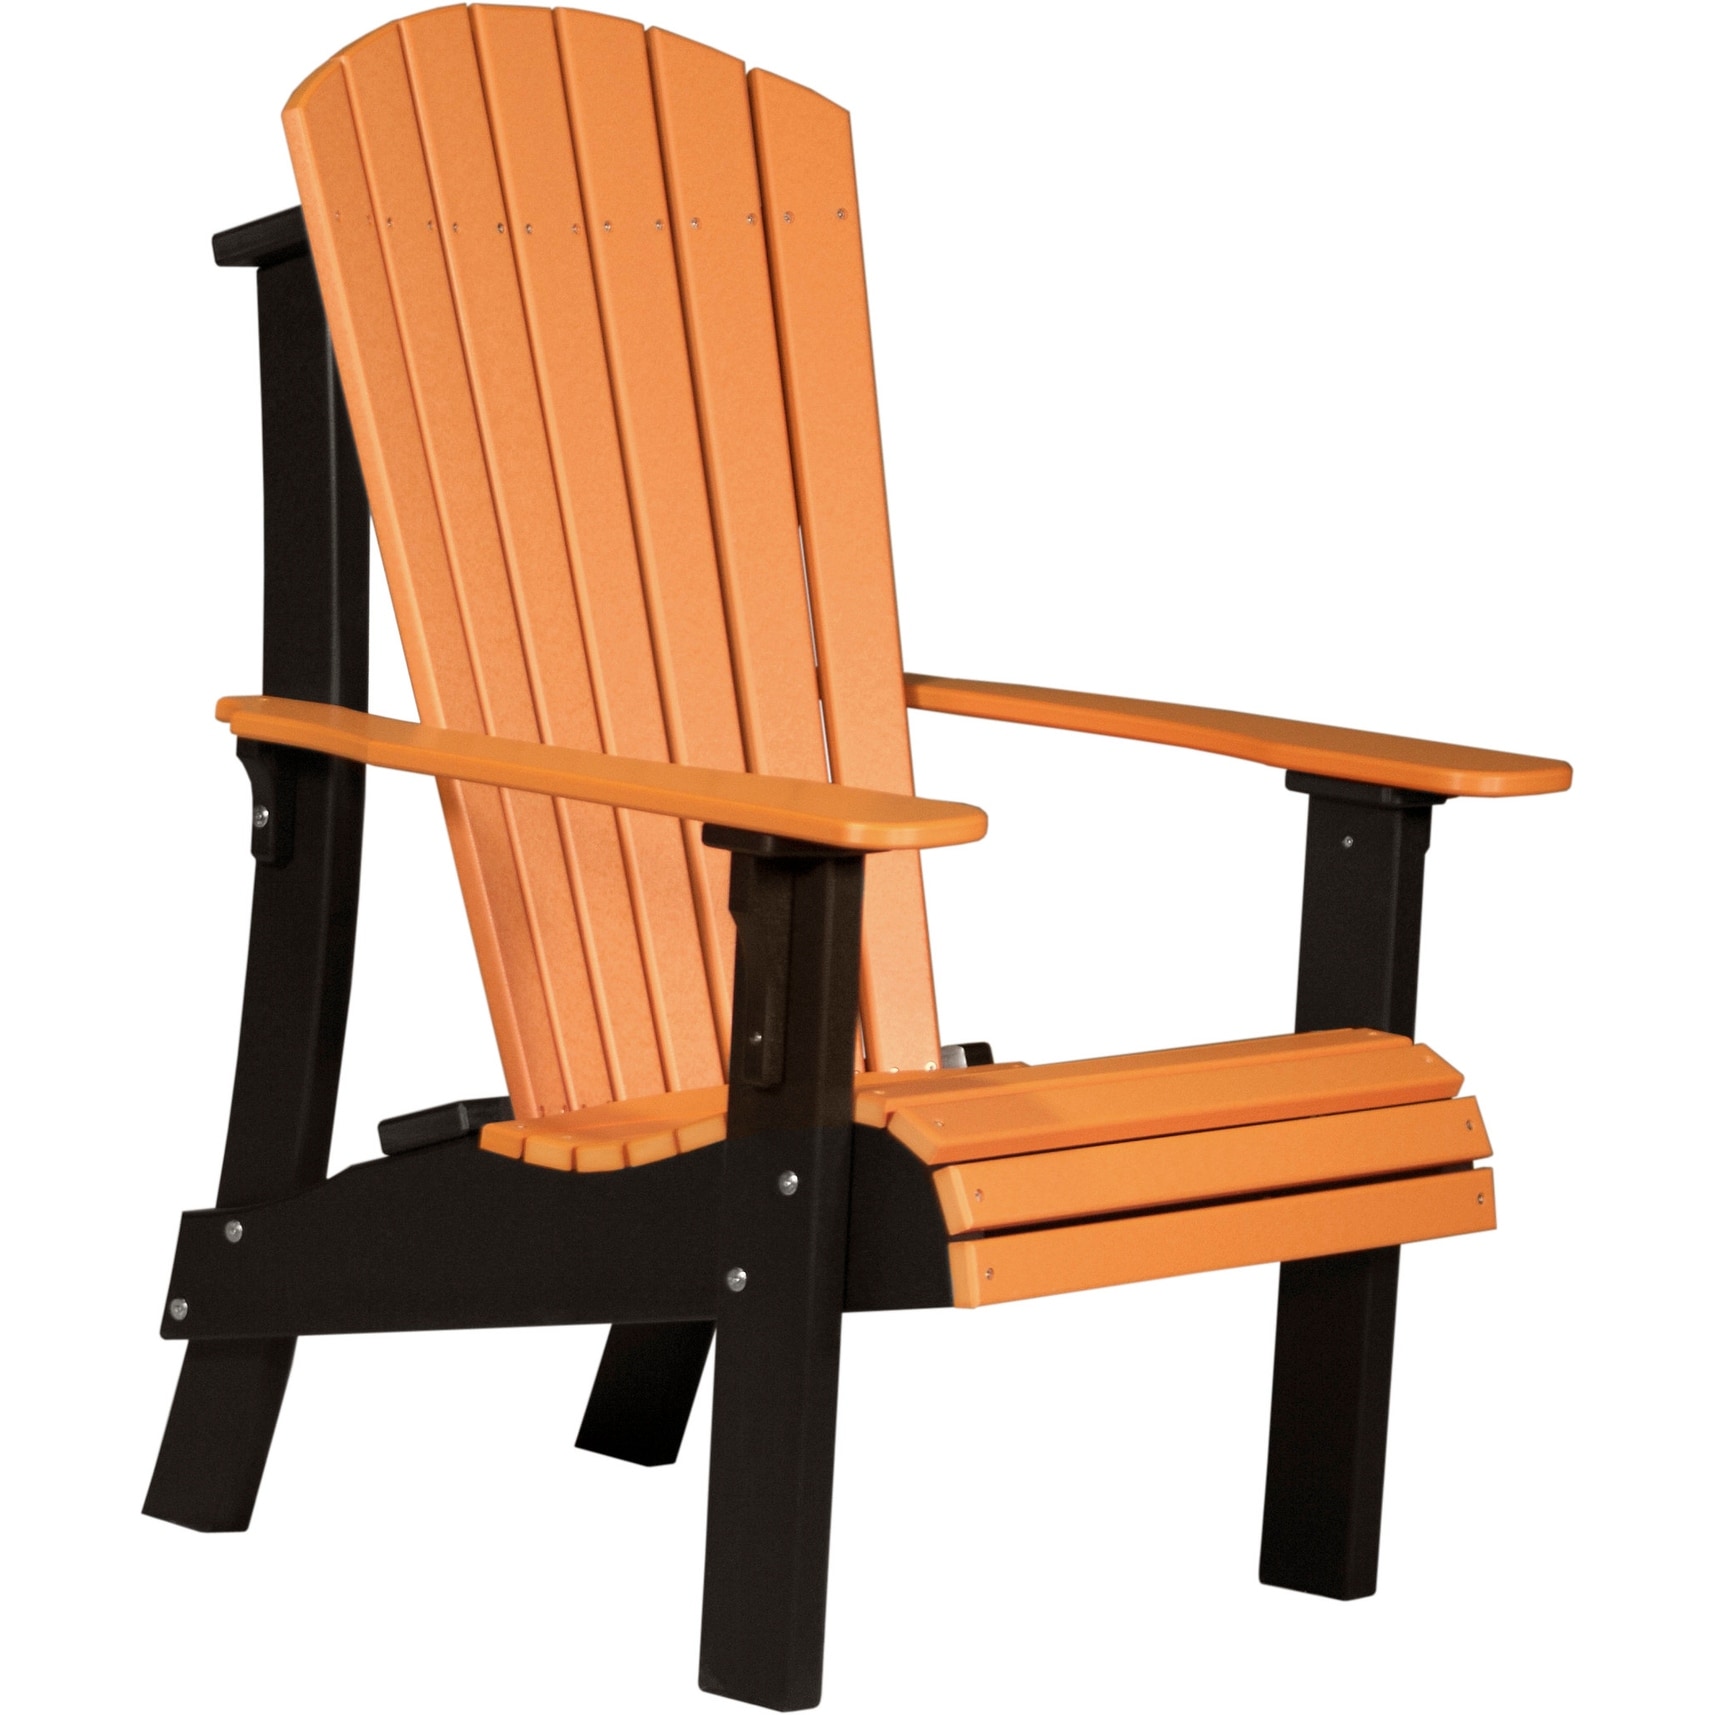 Poly Lumber Royal Adirondack Chair